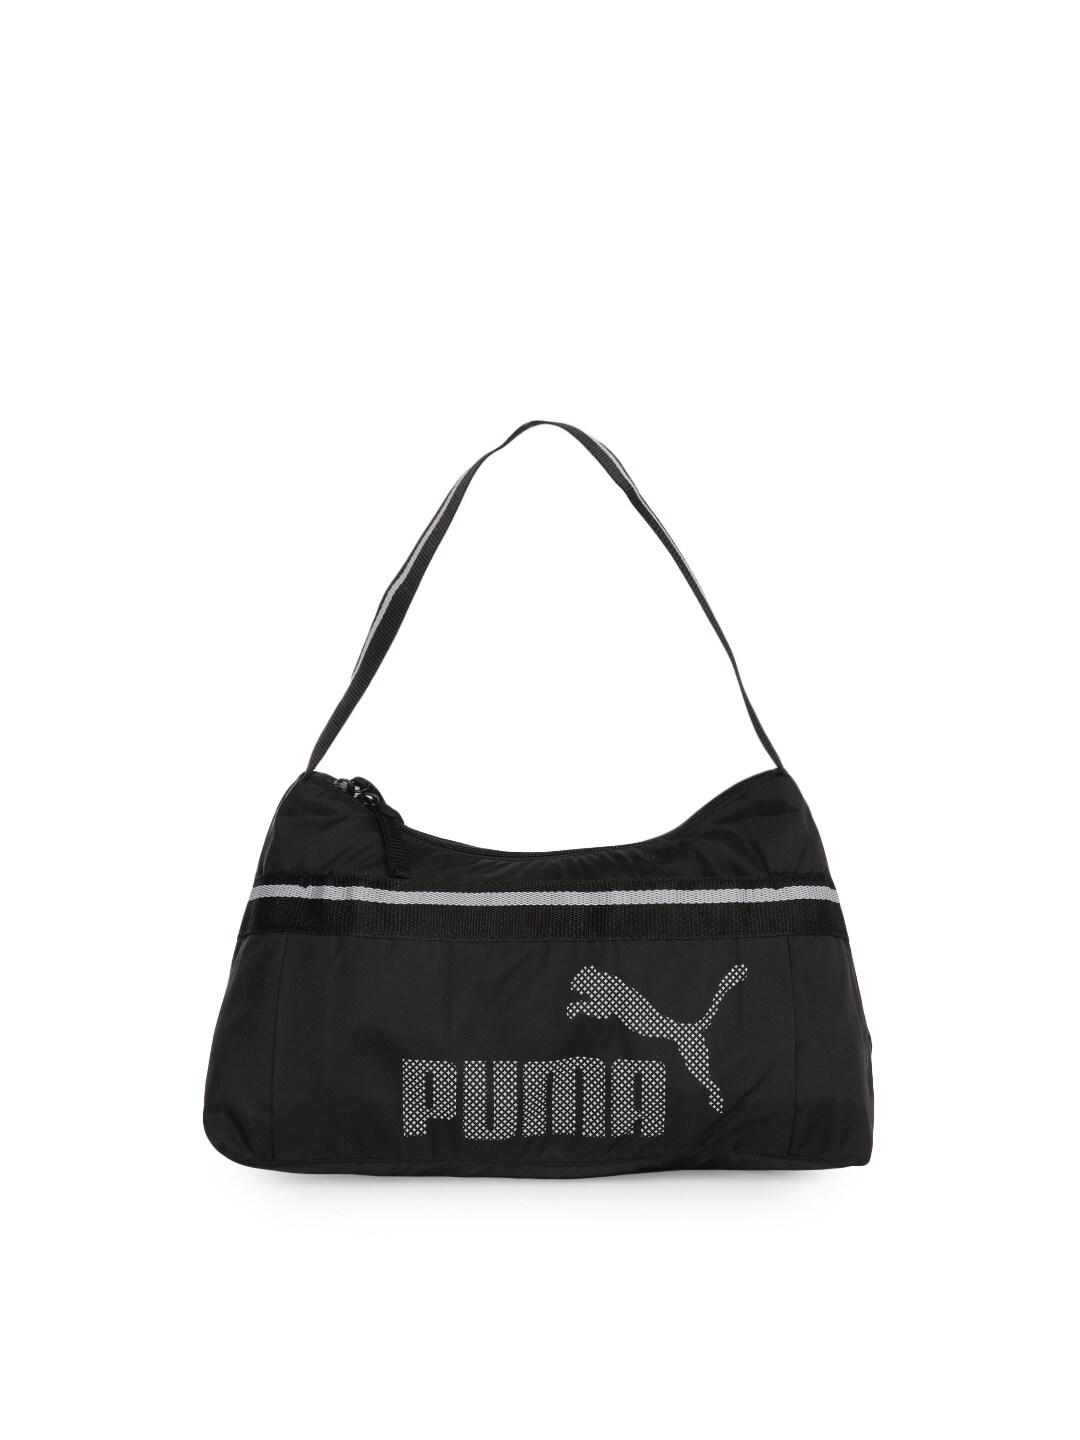 Puma Women Black Handbag